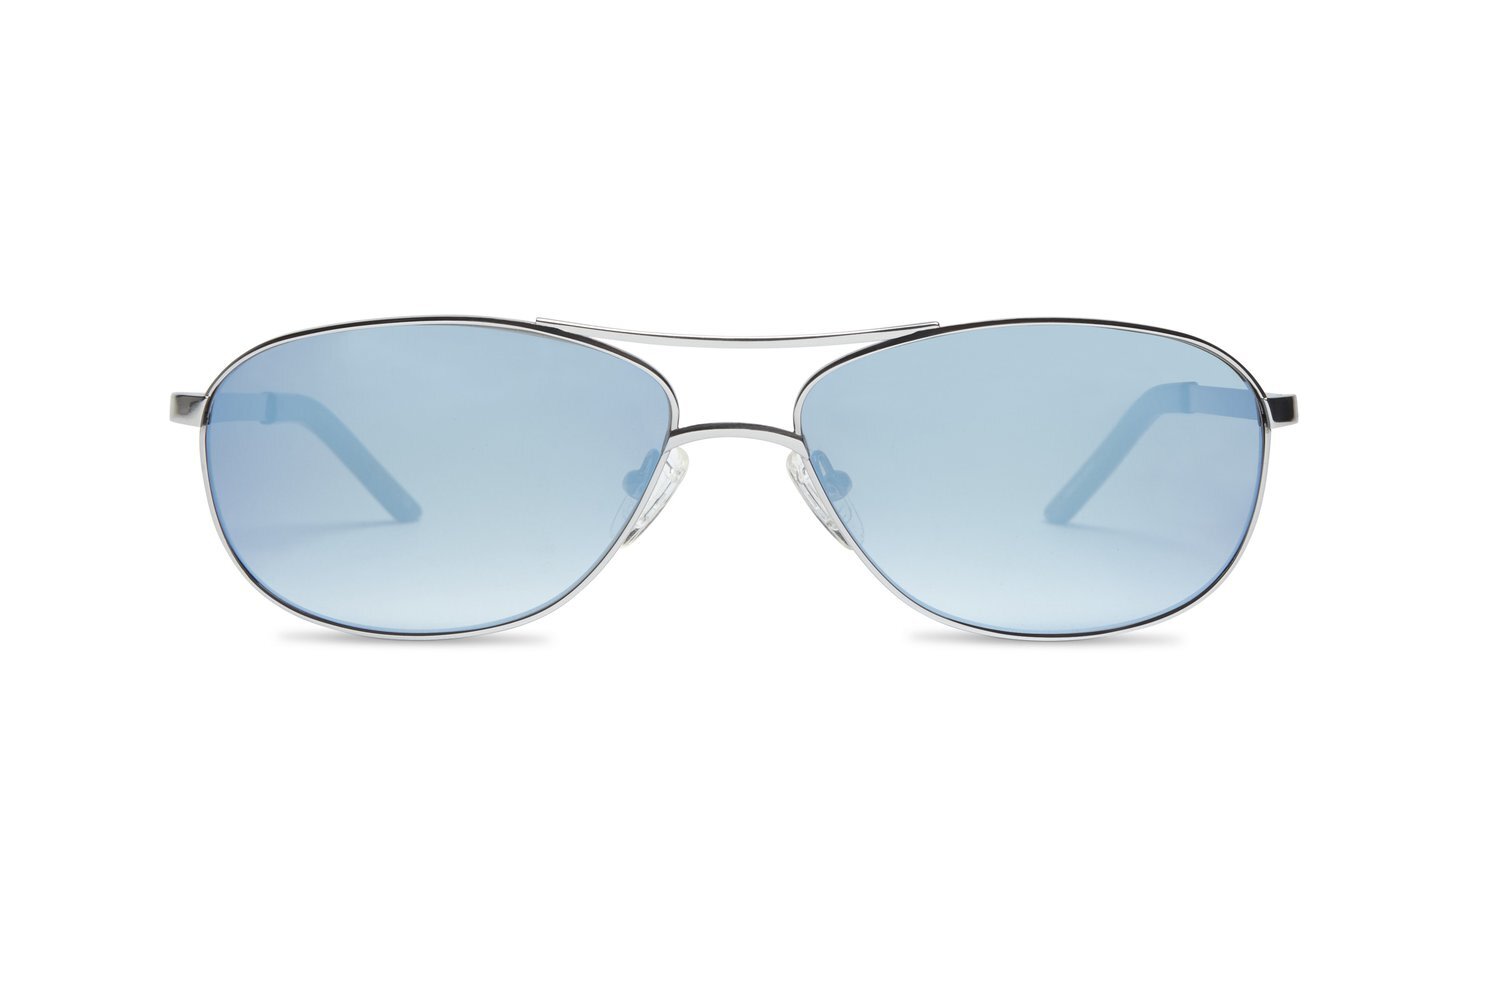 Men’s Aviator Sunglasses In Silver With Blue Lenses - High Flyer Two One Size Gazal Eyewear